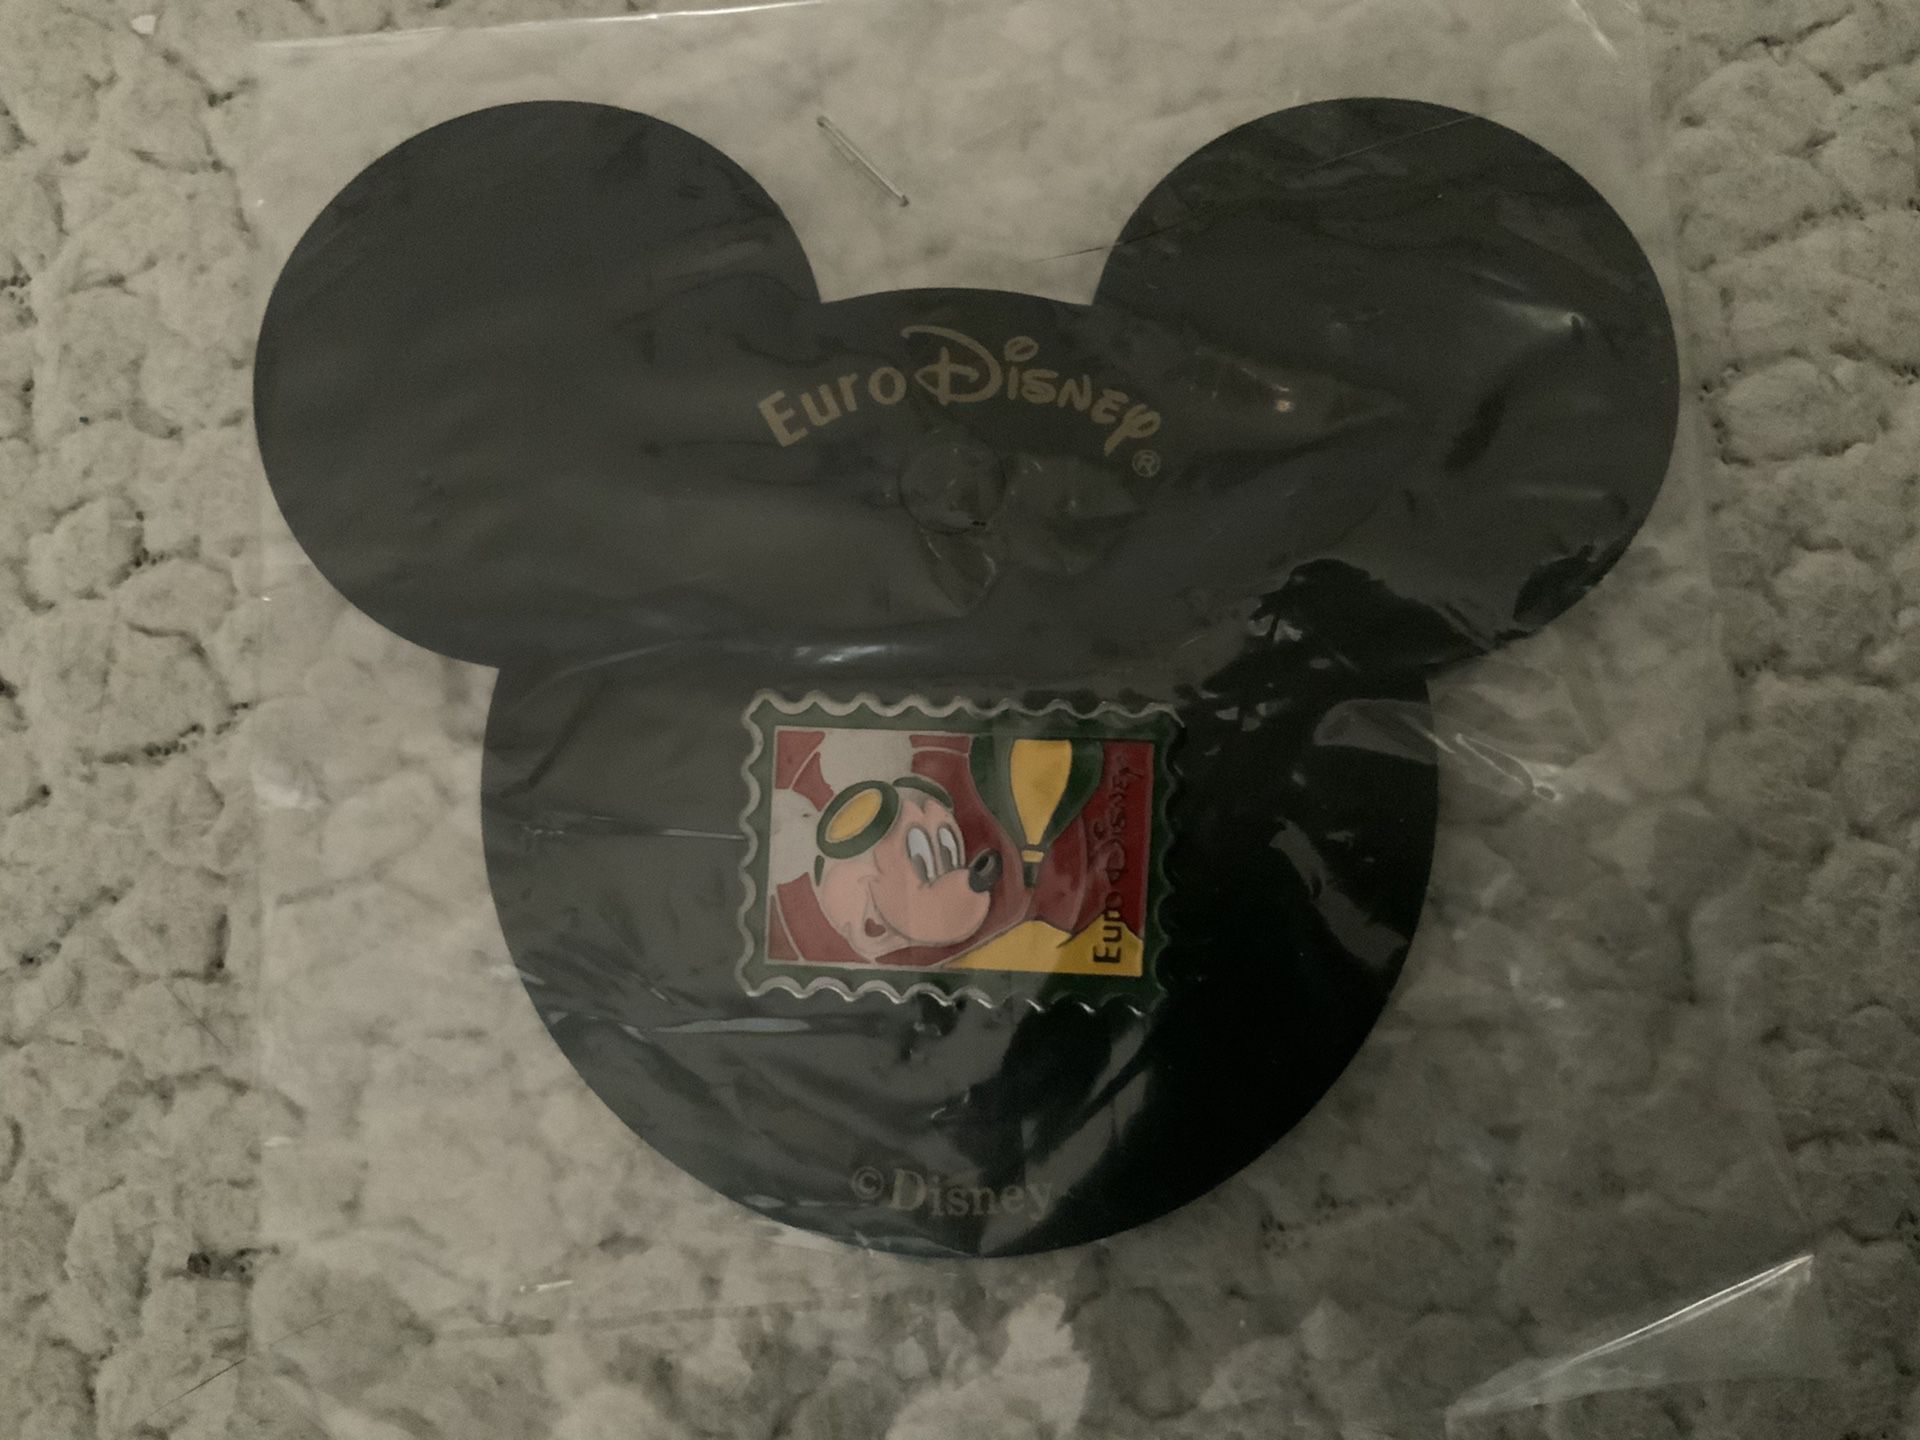 New MINT CONDITION. Mickey Mouse Euro Disney Metal Enamel Postage Stamp Lapel Pin Pinback 1992 Walt Disney in Original packaging